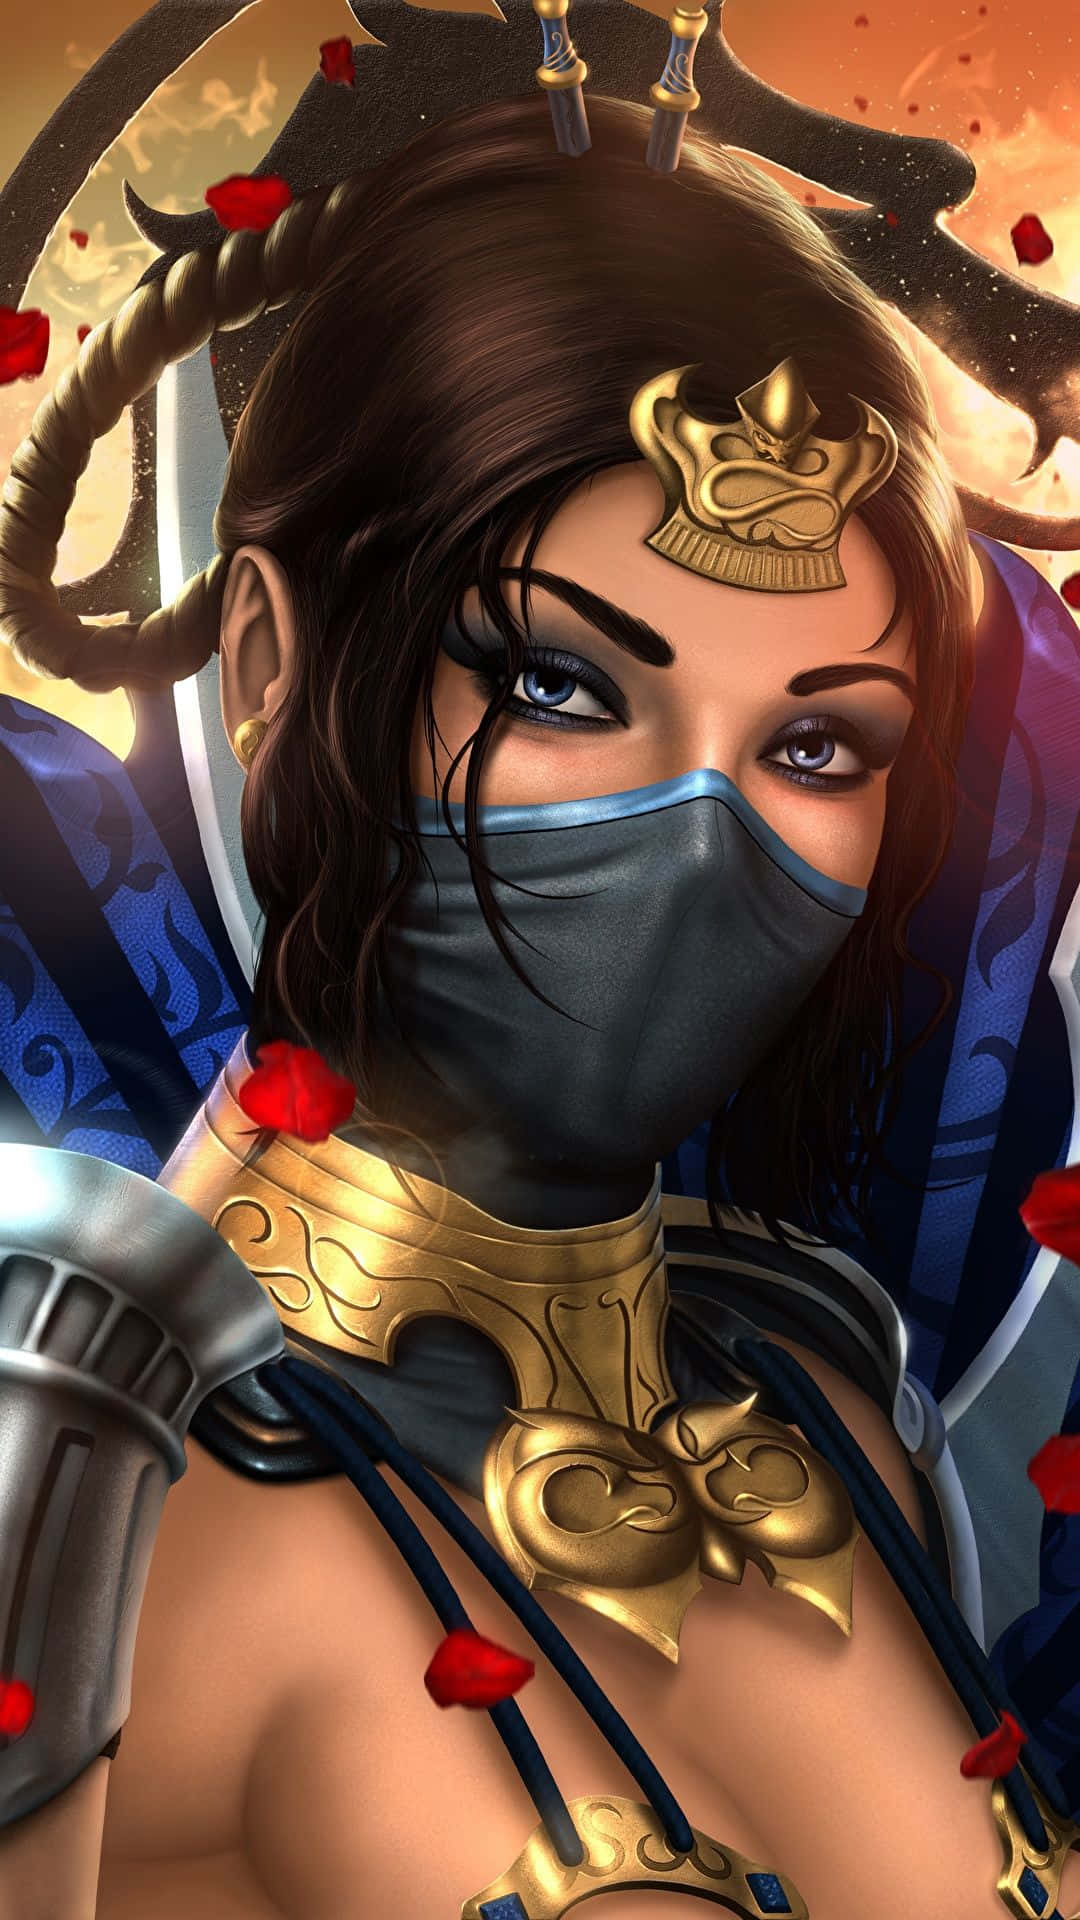 Warrior Princess Kitana in Mortal Kombat Wallpaper